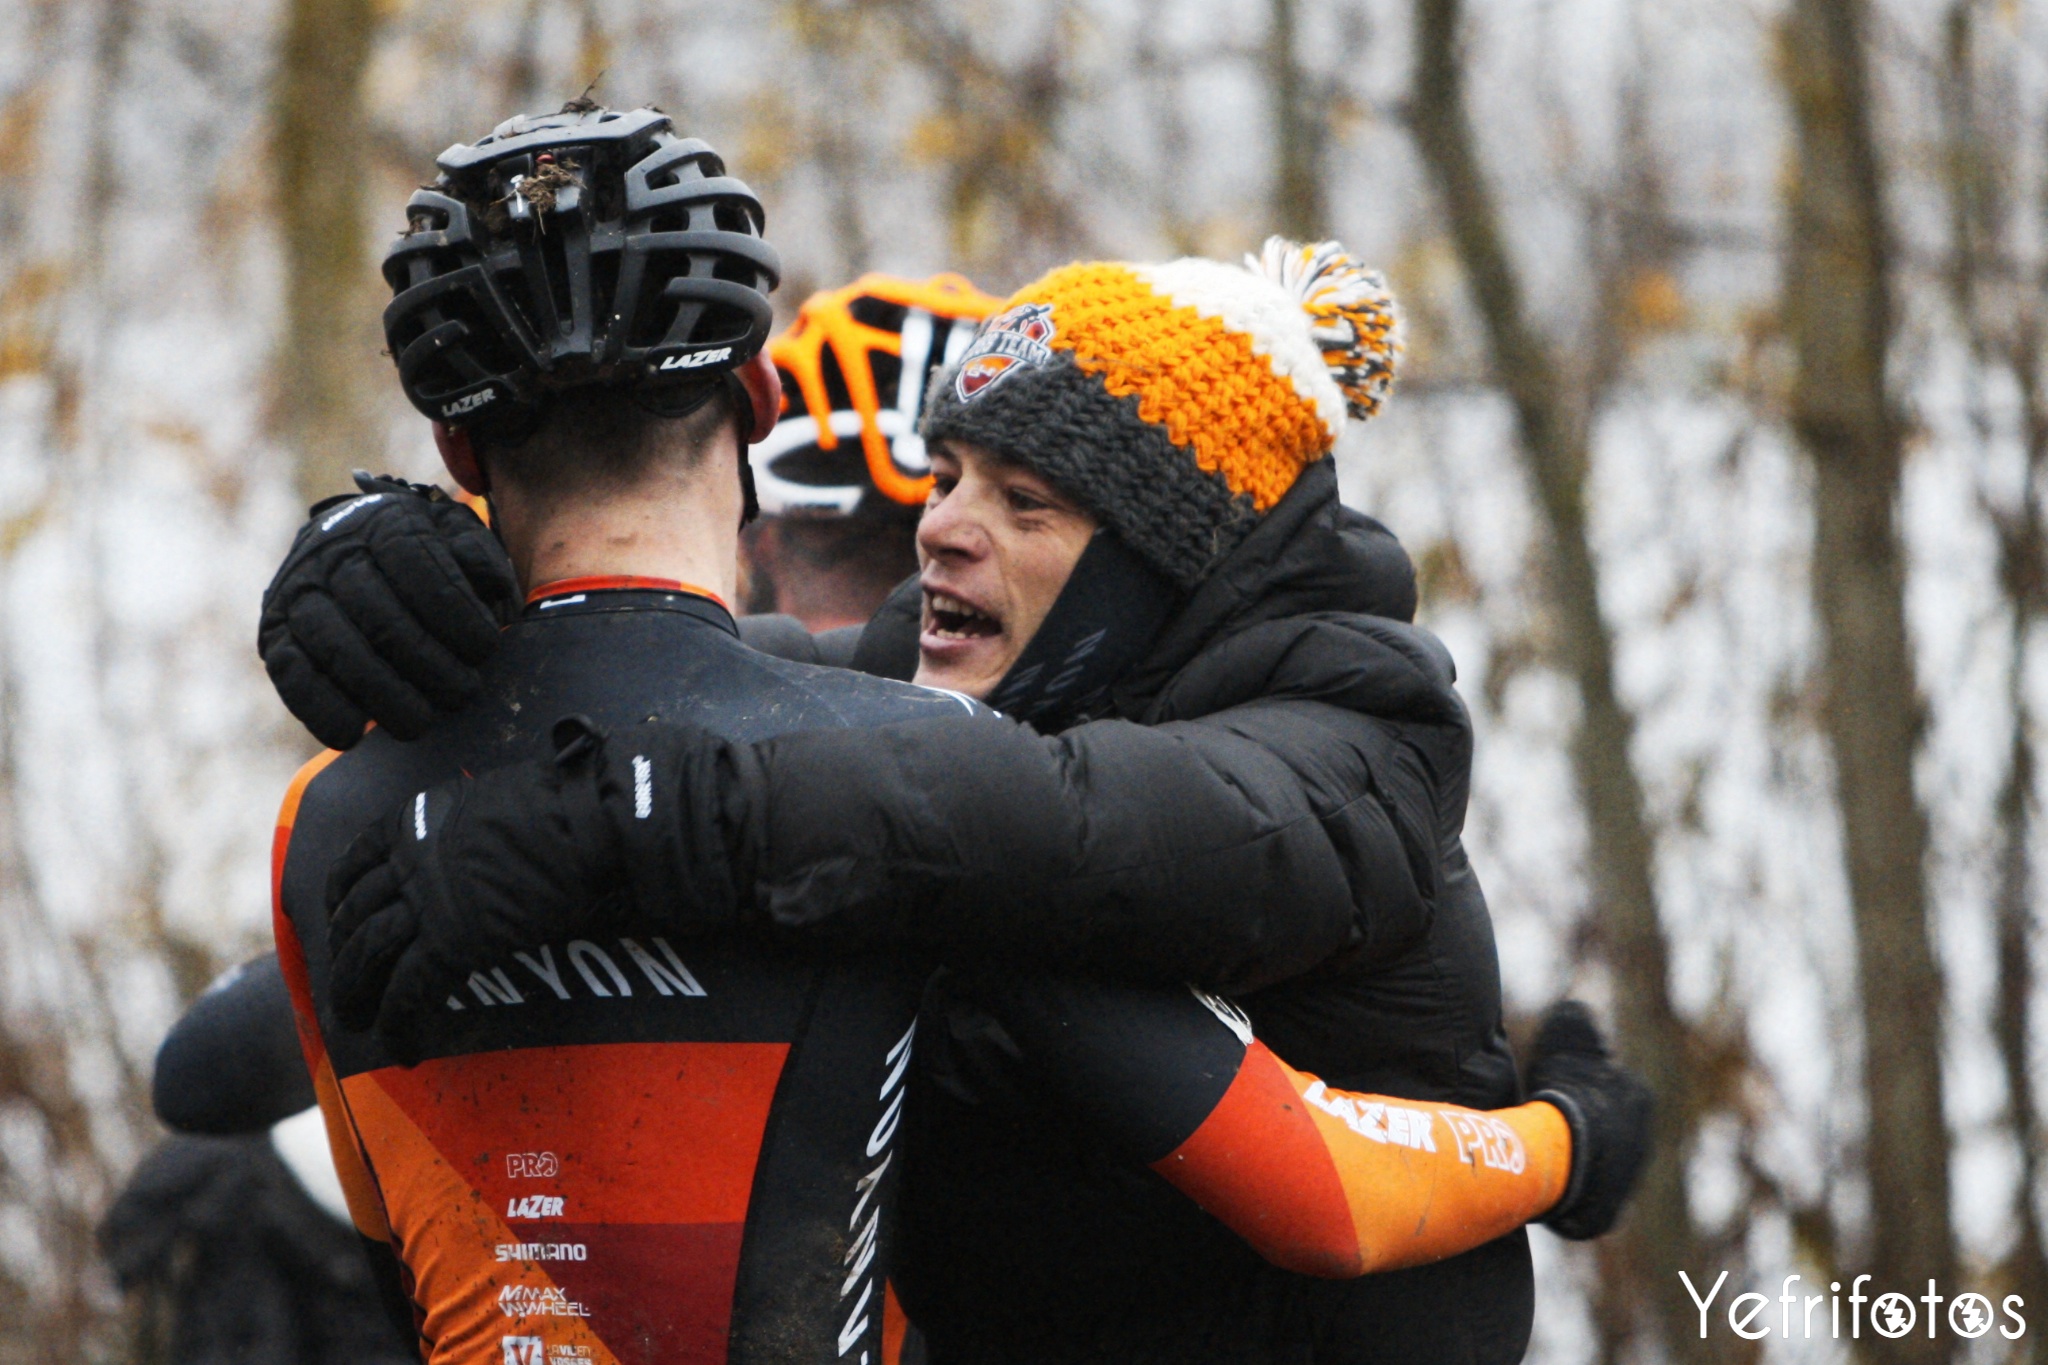 Steve Chainel Joie - Team Chazal Canyon - Coupe de France Cyclocross Jablines